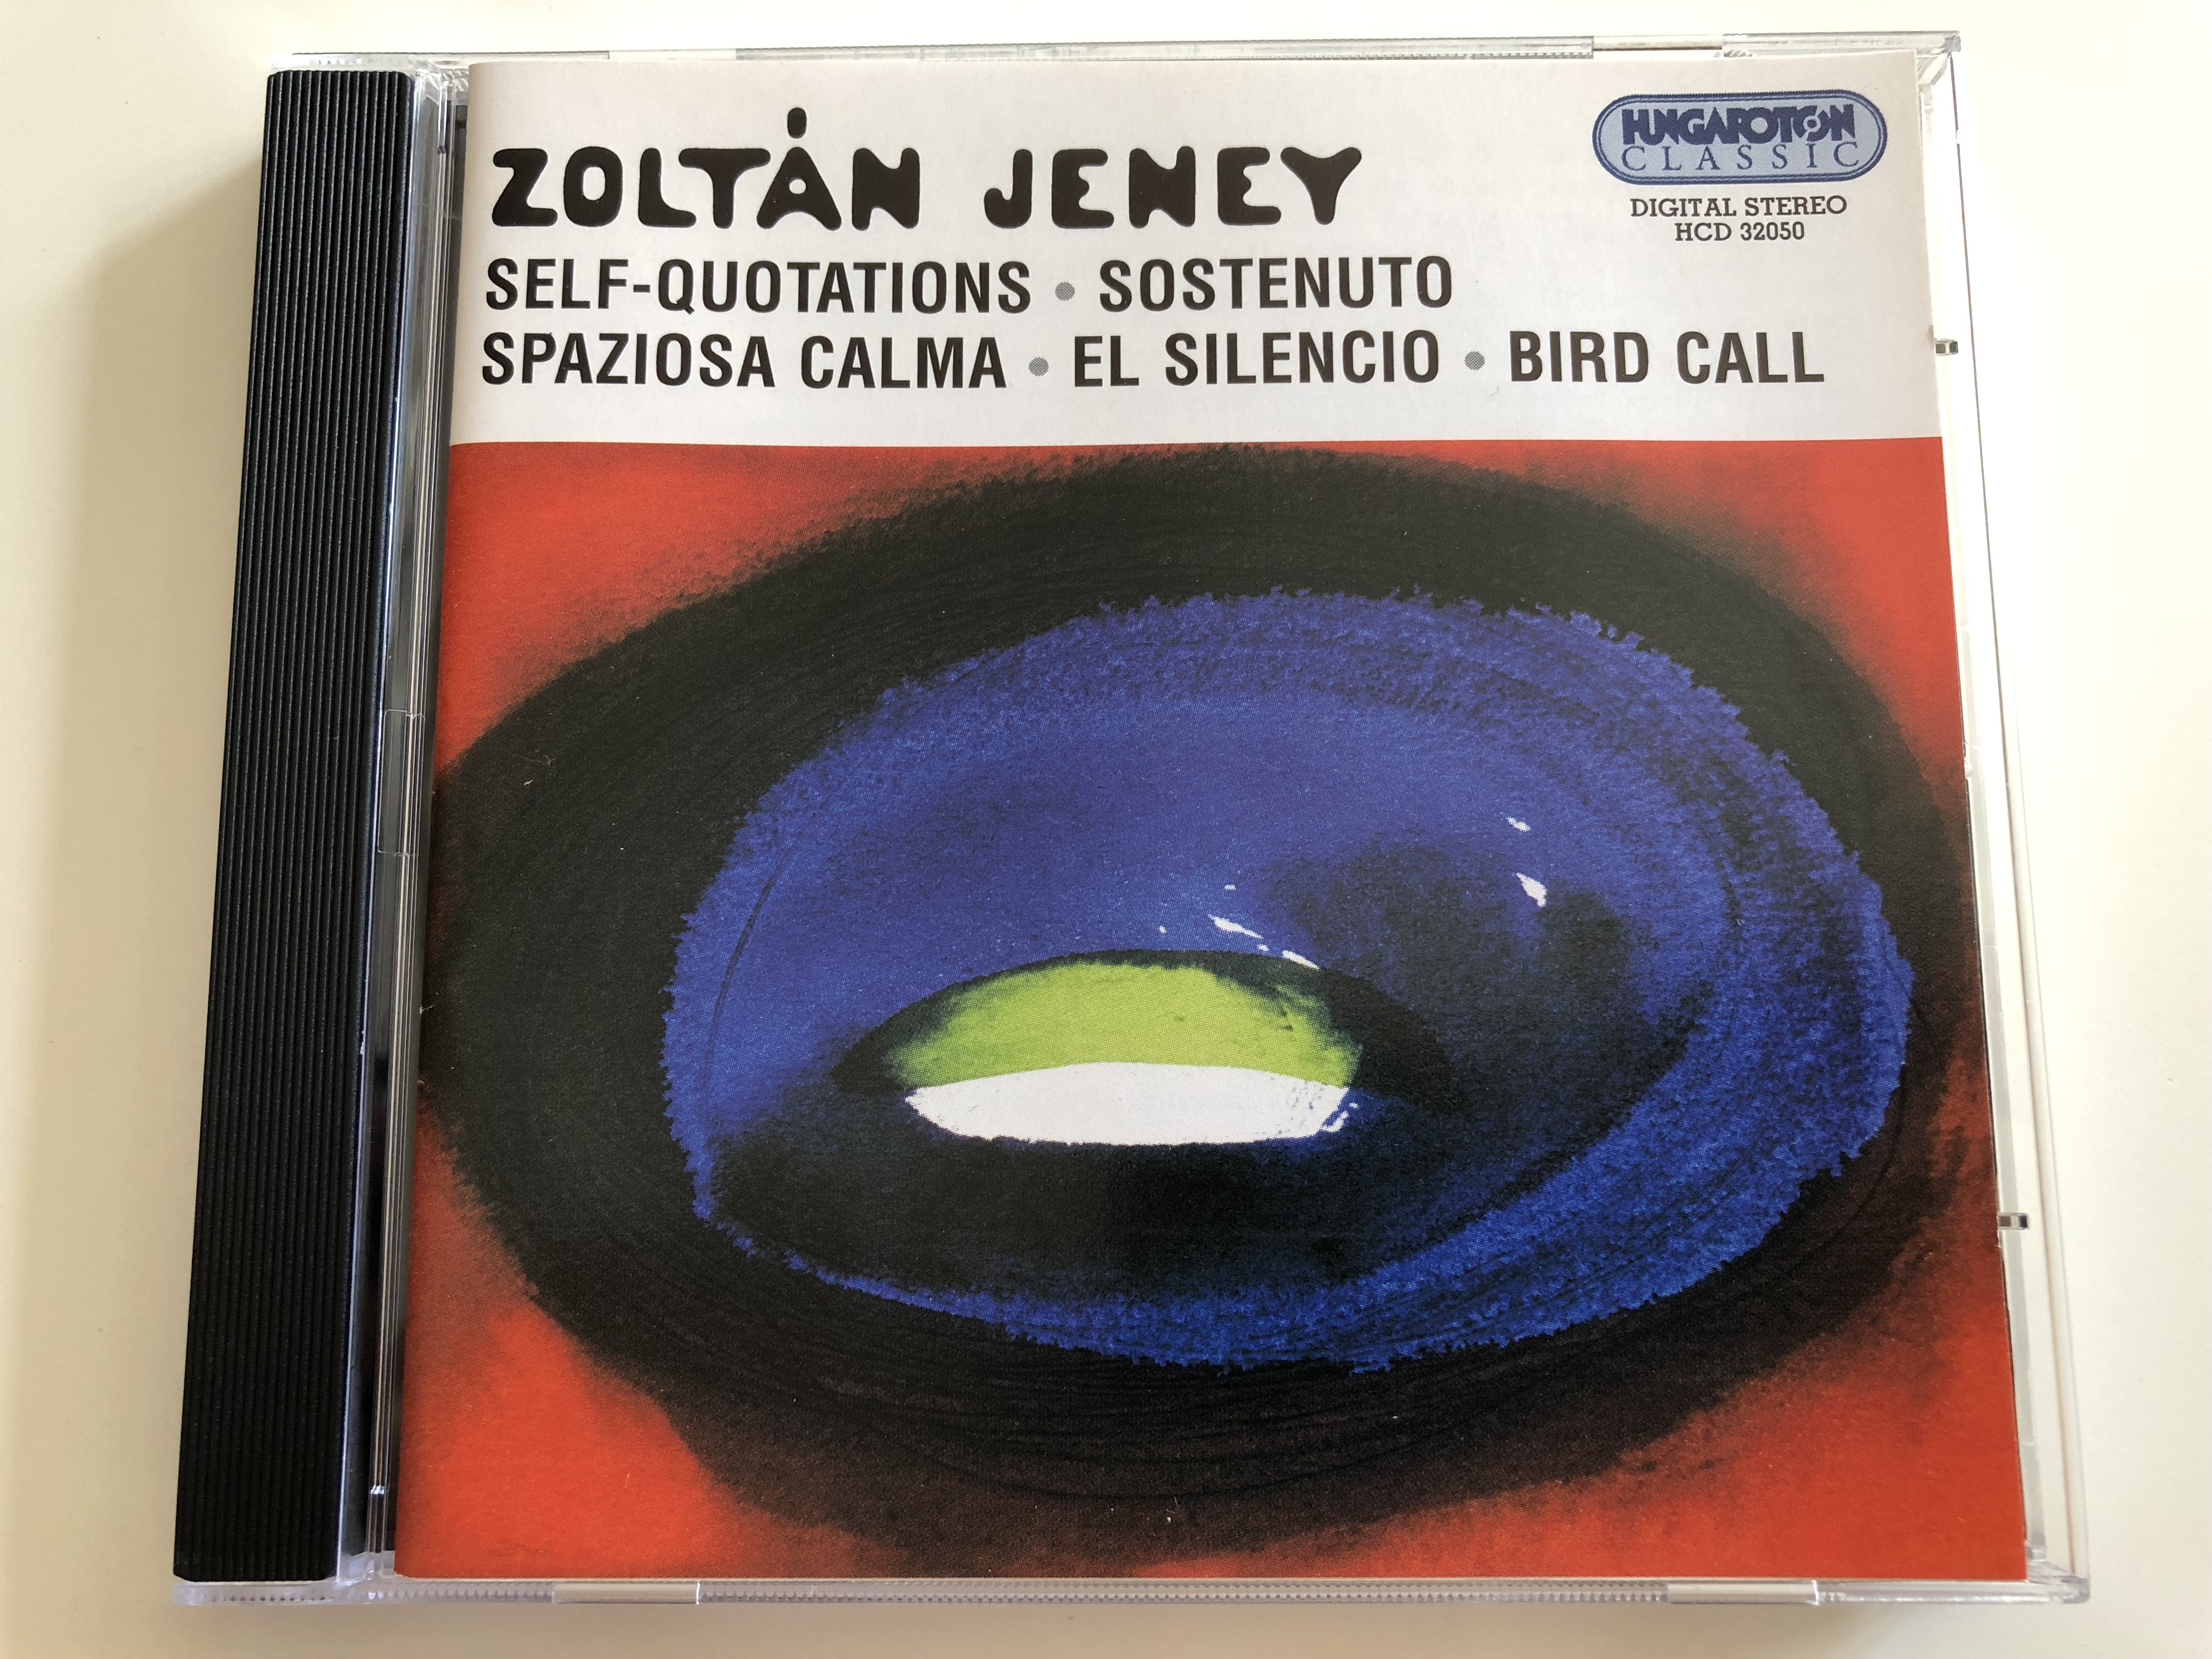 zolt-n-jeney-self-quotations-sostenuto-spaziosa-calma-el-silencio-bird-call-hungaroton-classic-audio-cd-2002-hcd-32050-1-.jpg